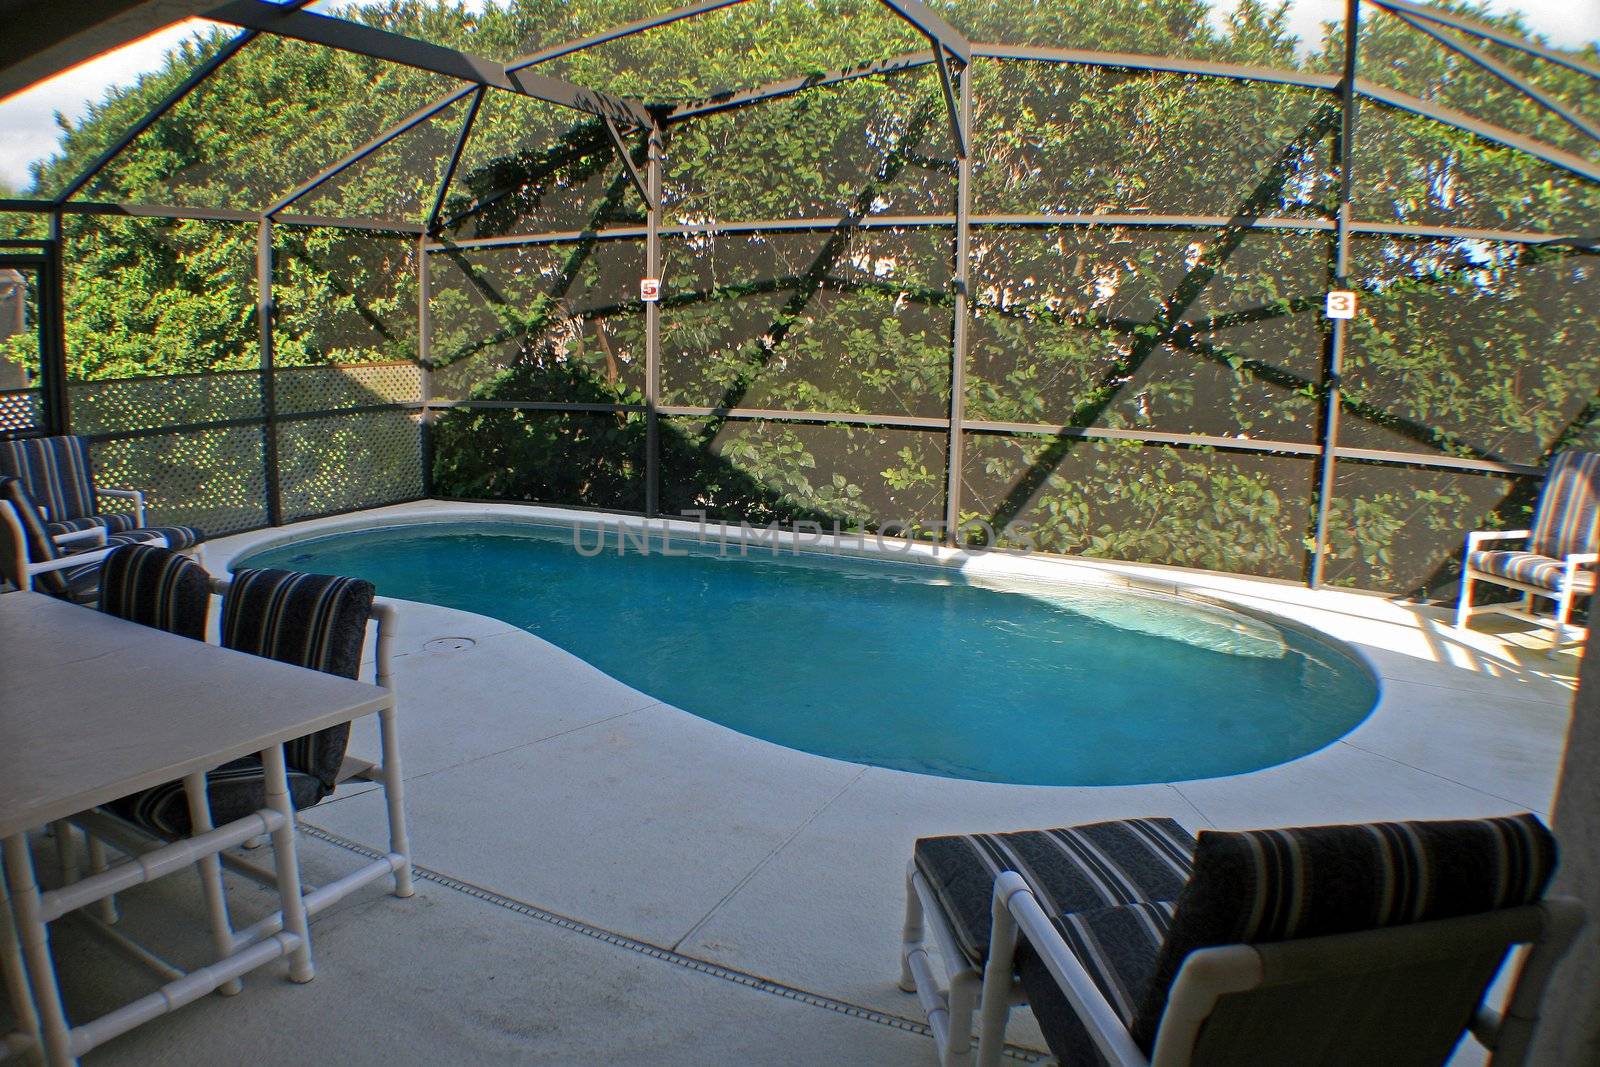 A swimming pool and lanai in Florida.